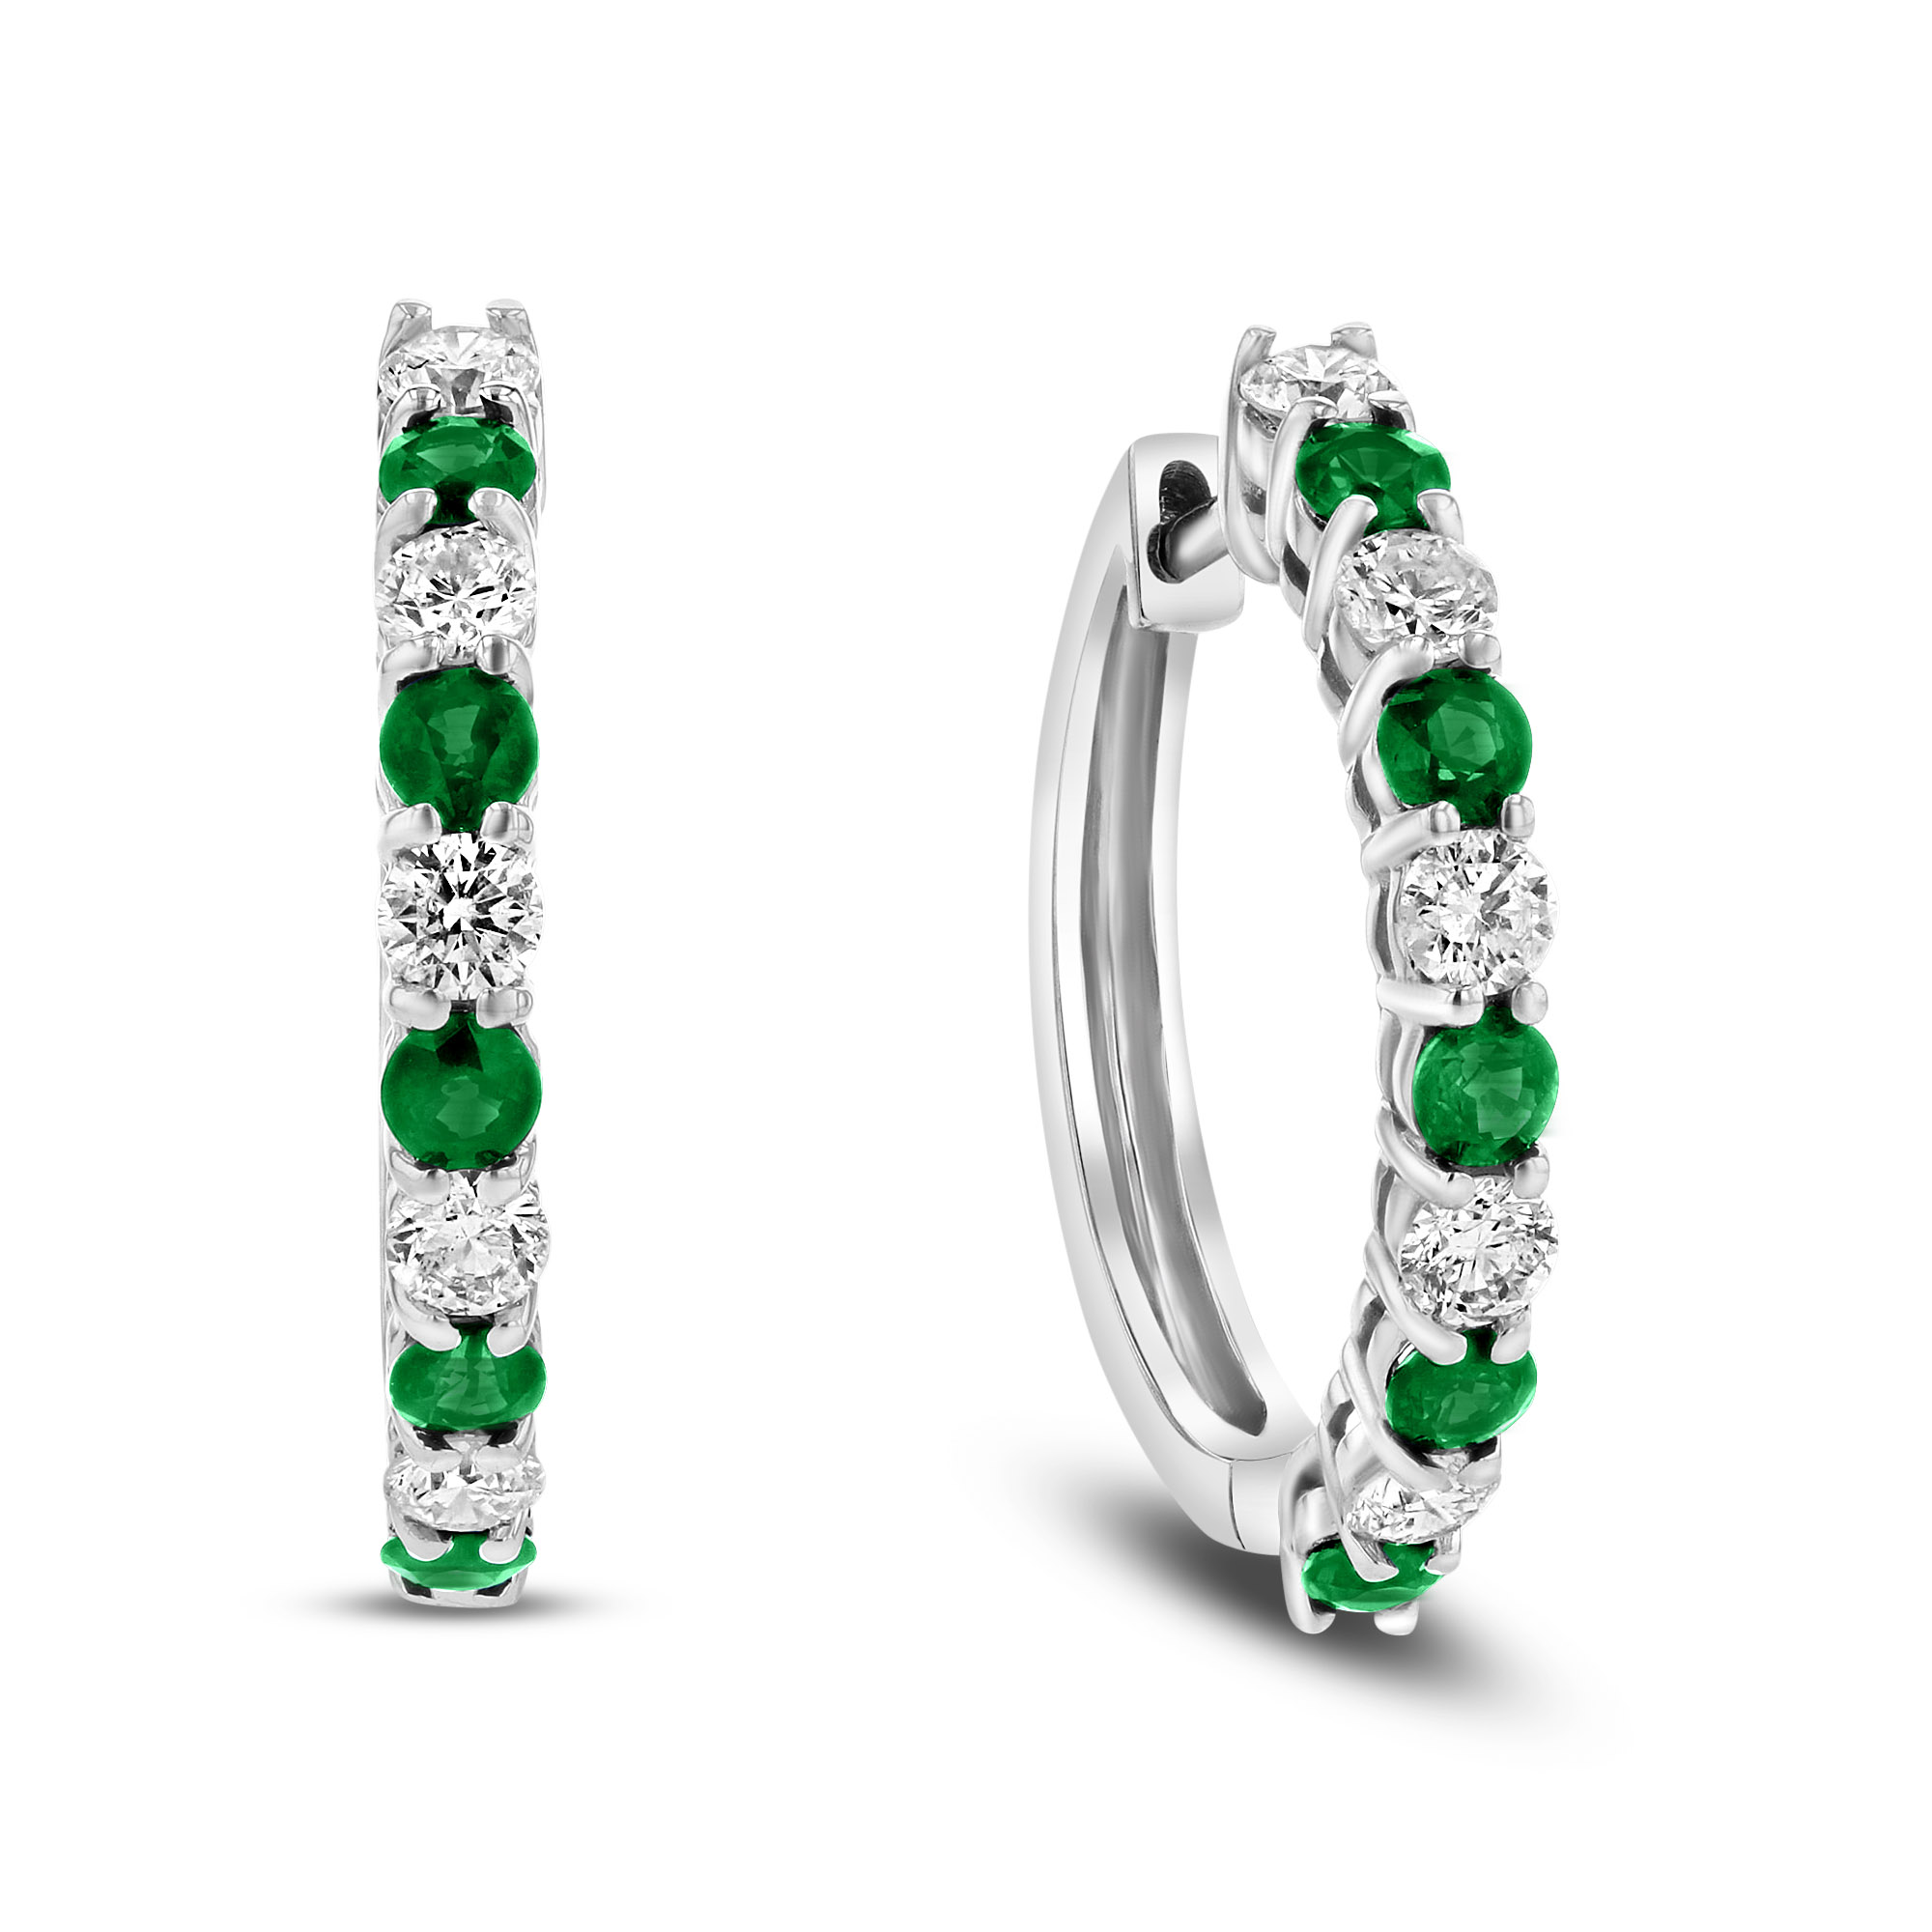 1.35ctw Diamond and Emerald Hoop Earrings in 14k White Gold